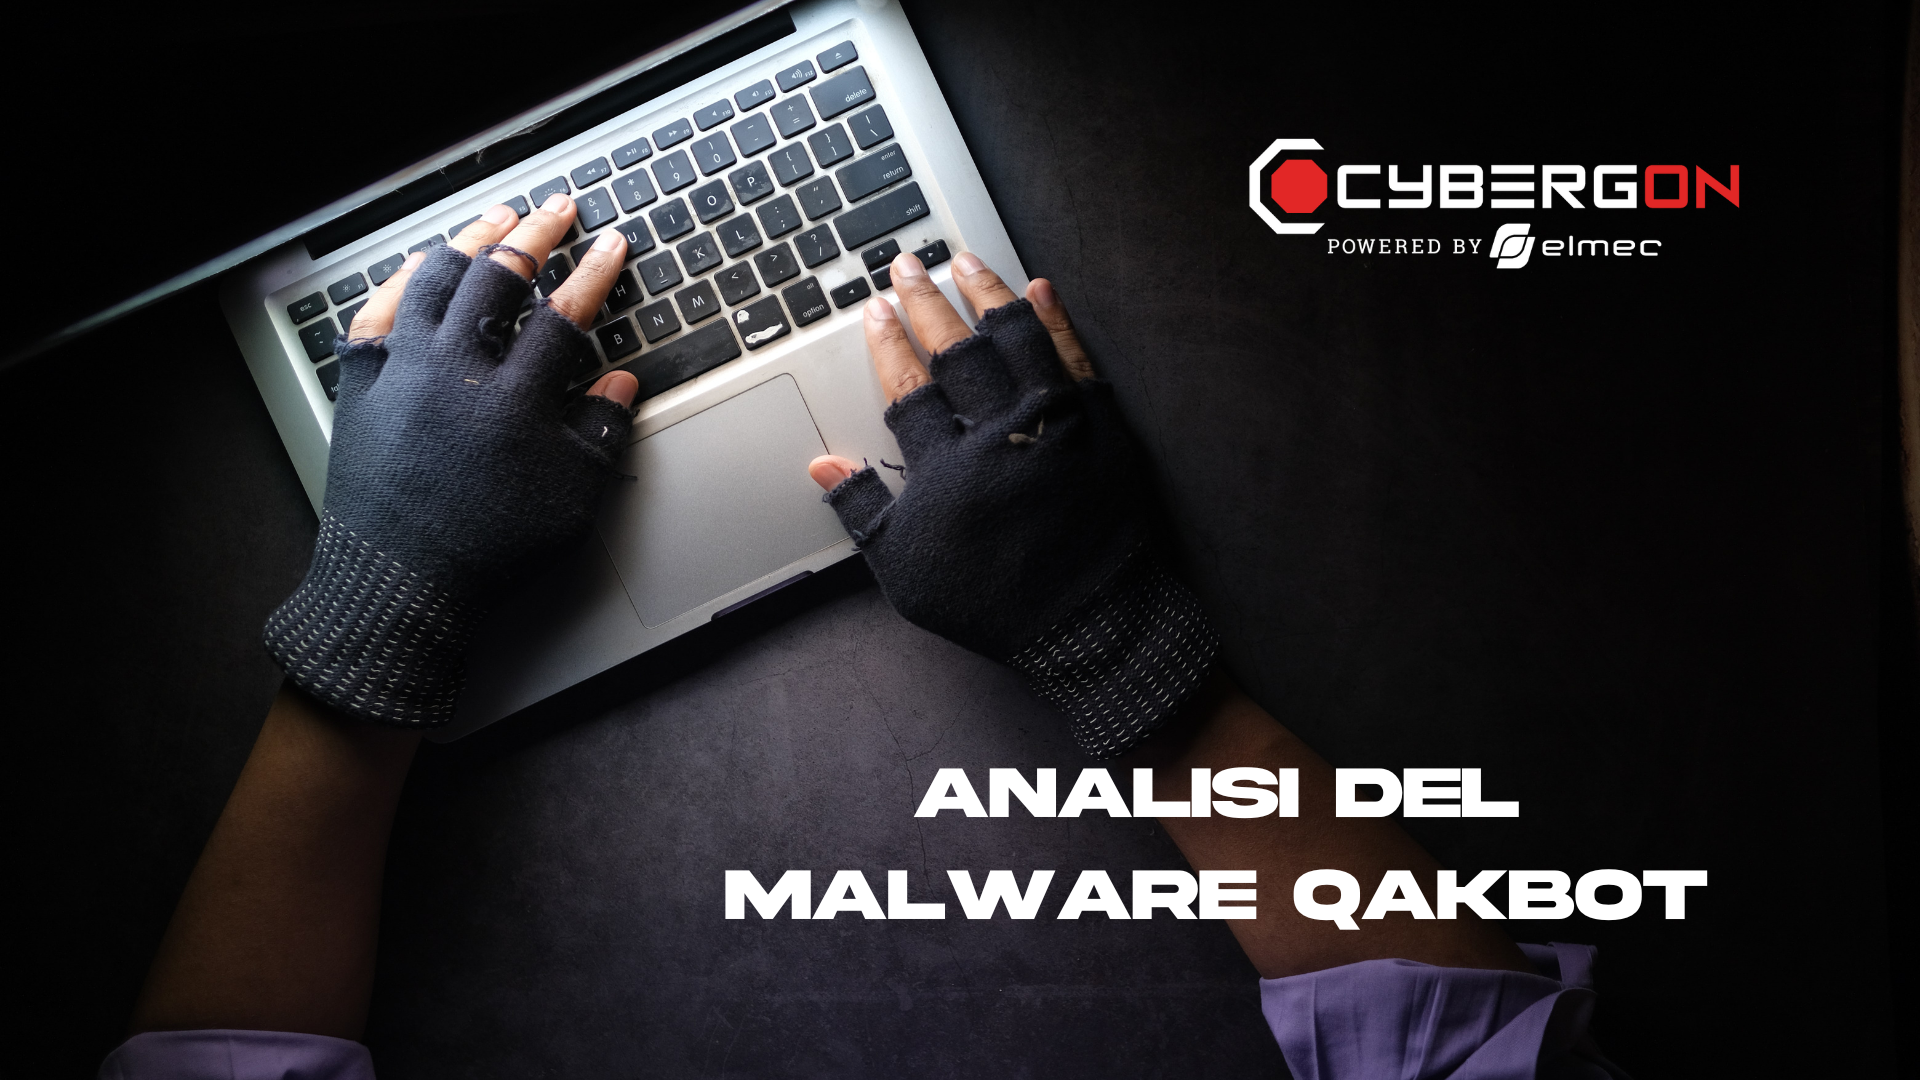 Qakbot Malware